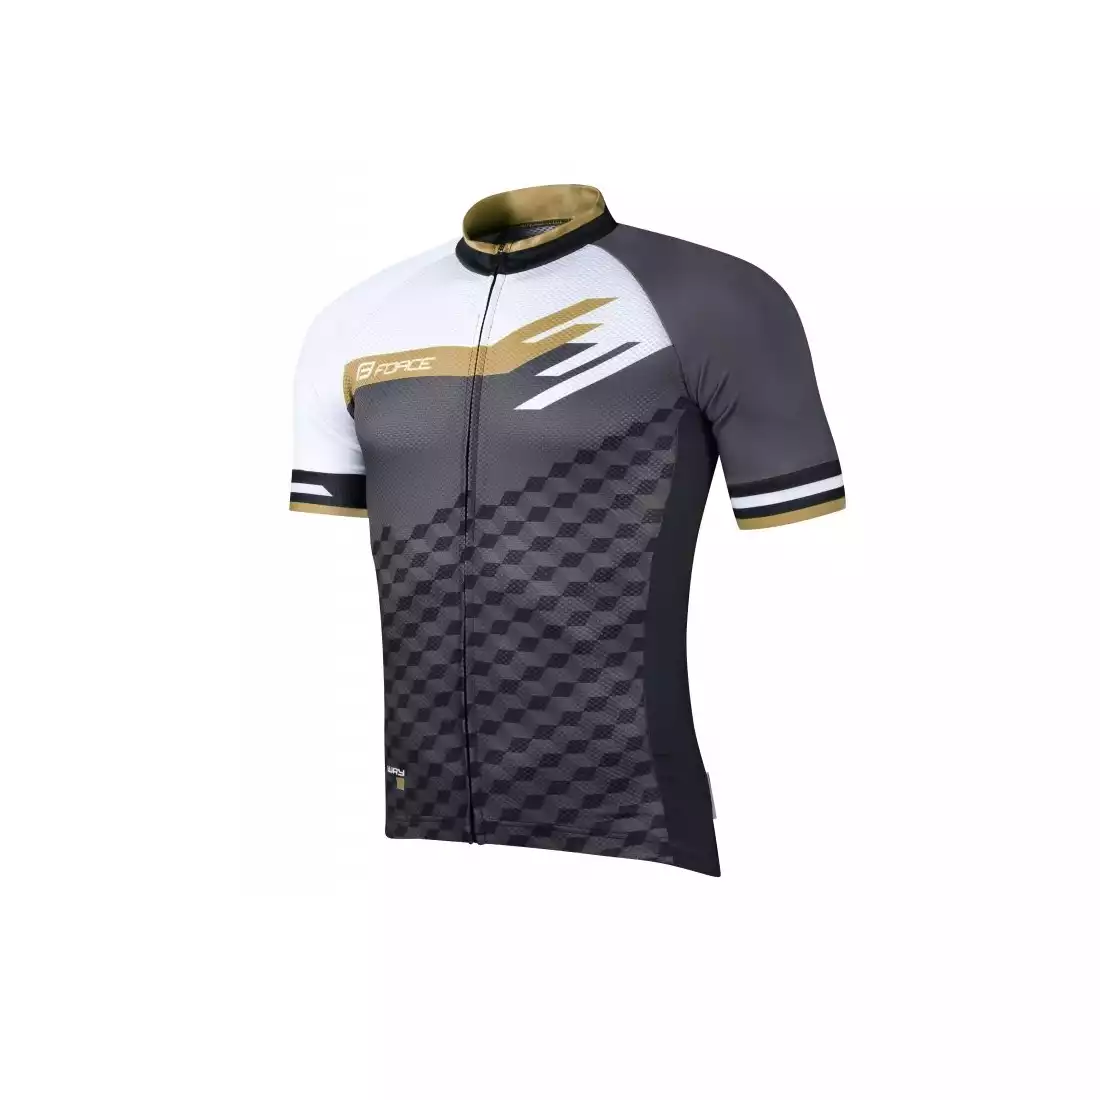 Cycling Jersey Pattern Yellow Black White Men Polo Shirt Short